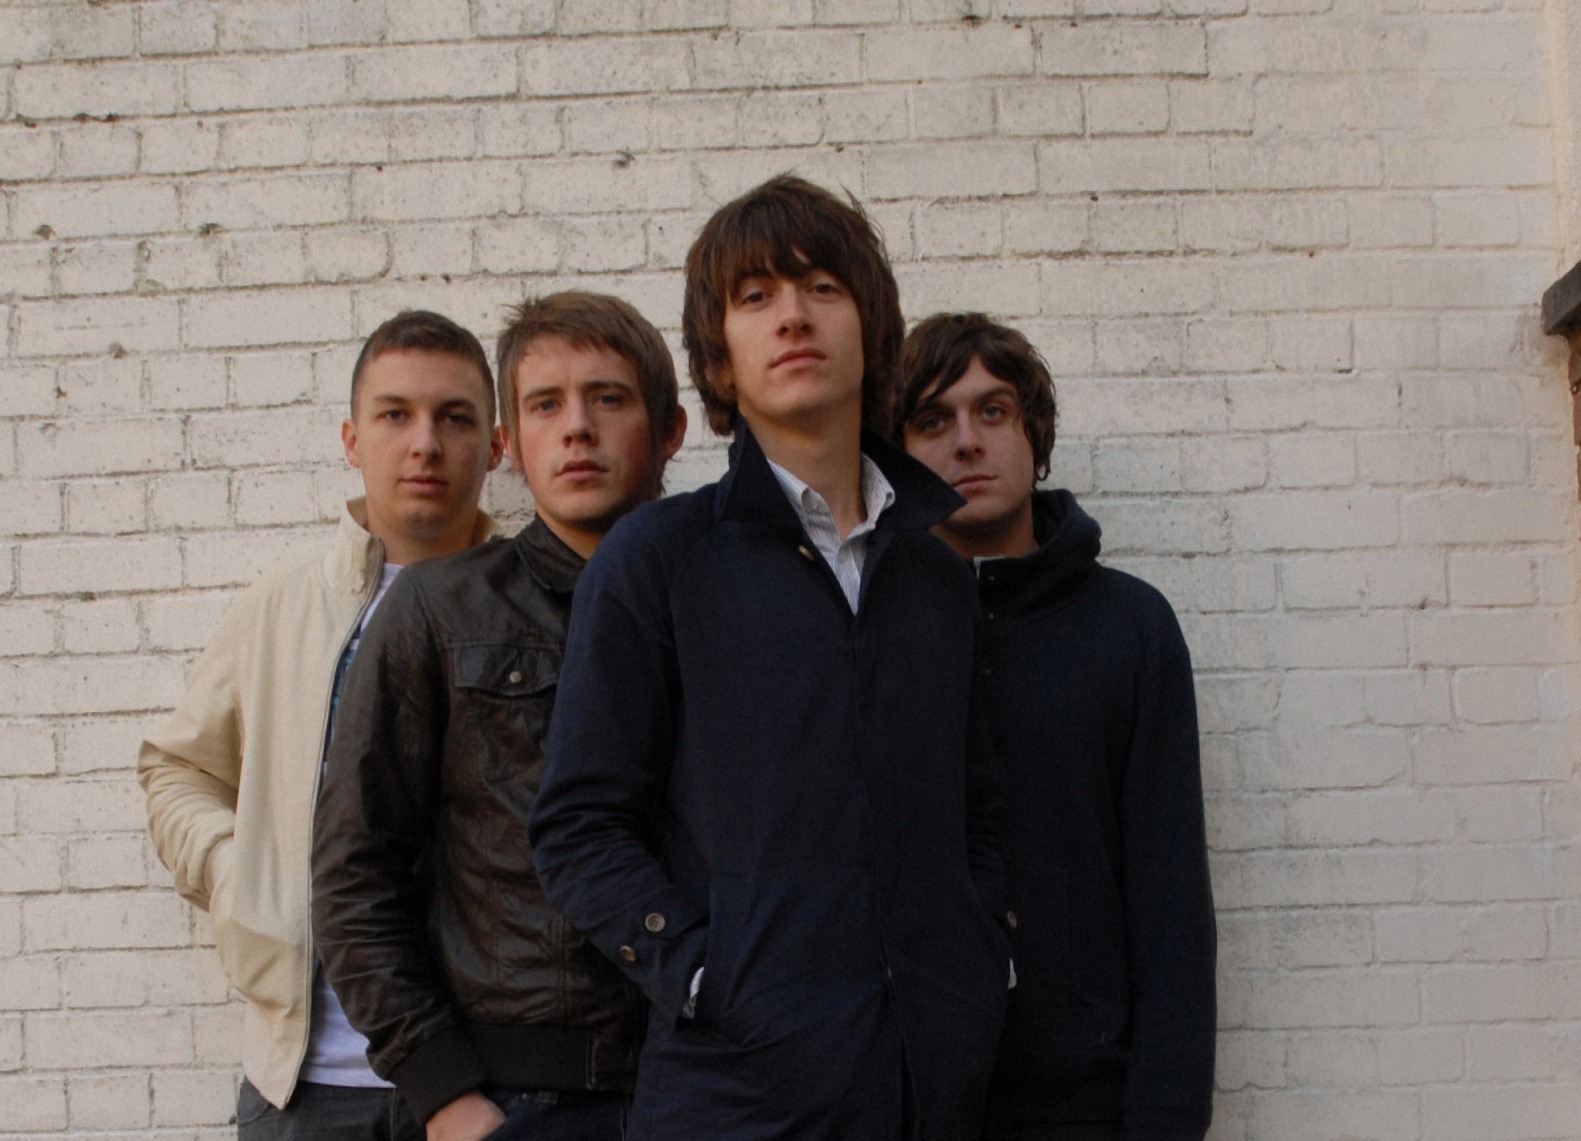 People say first. Группа Arctic Monkeys. Arctic Monkeys 2009. Arctic Monkeys 2022. Arctic Monkeys 2005.